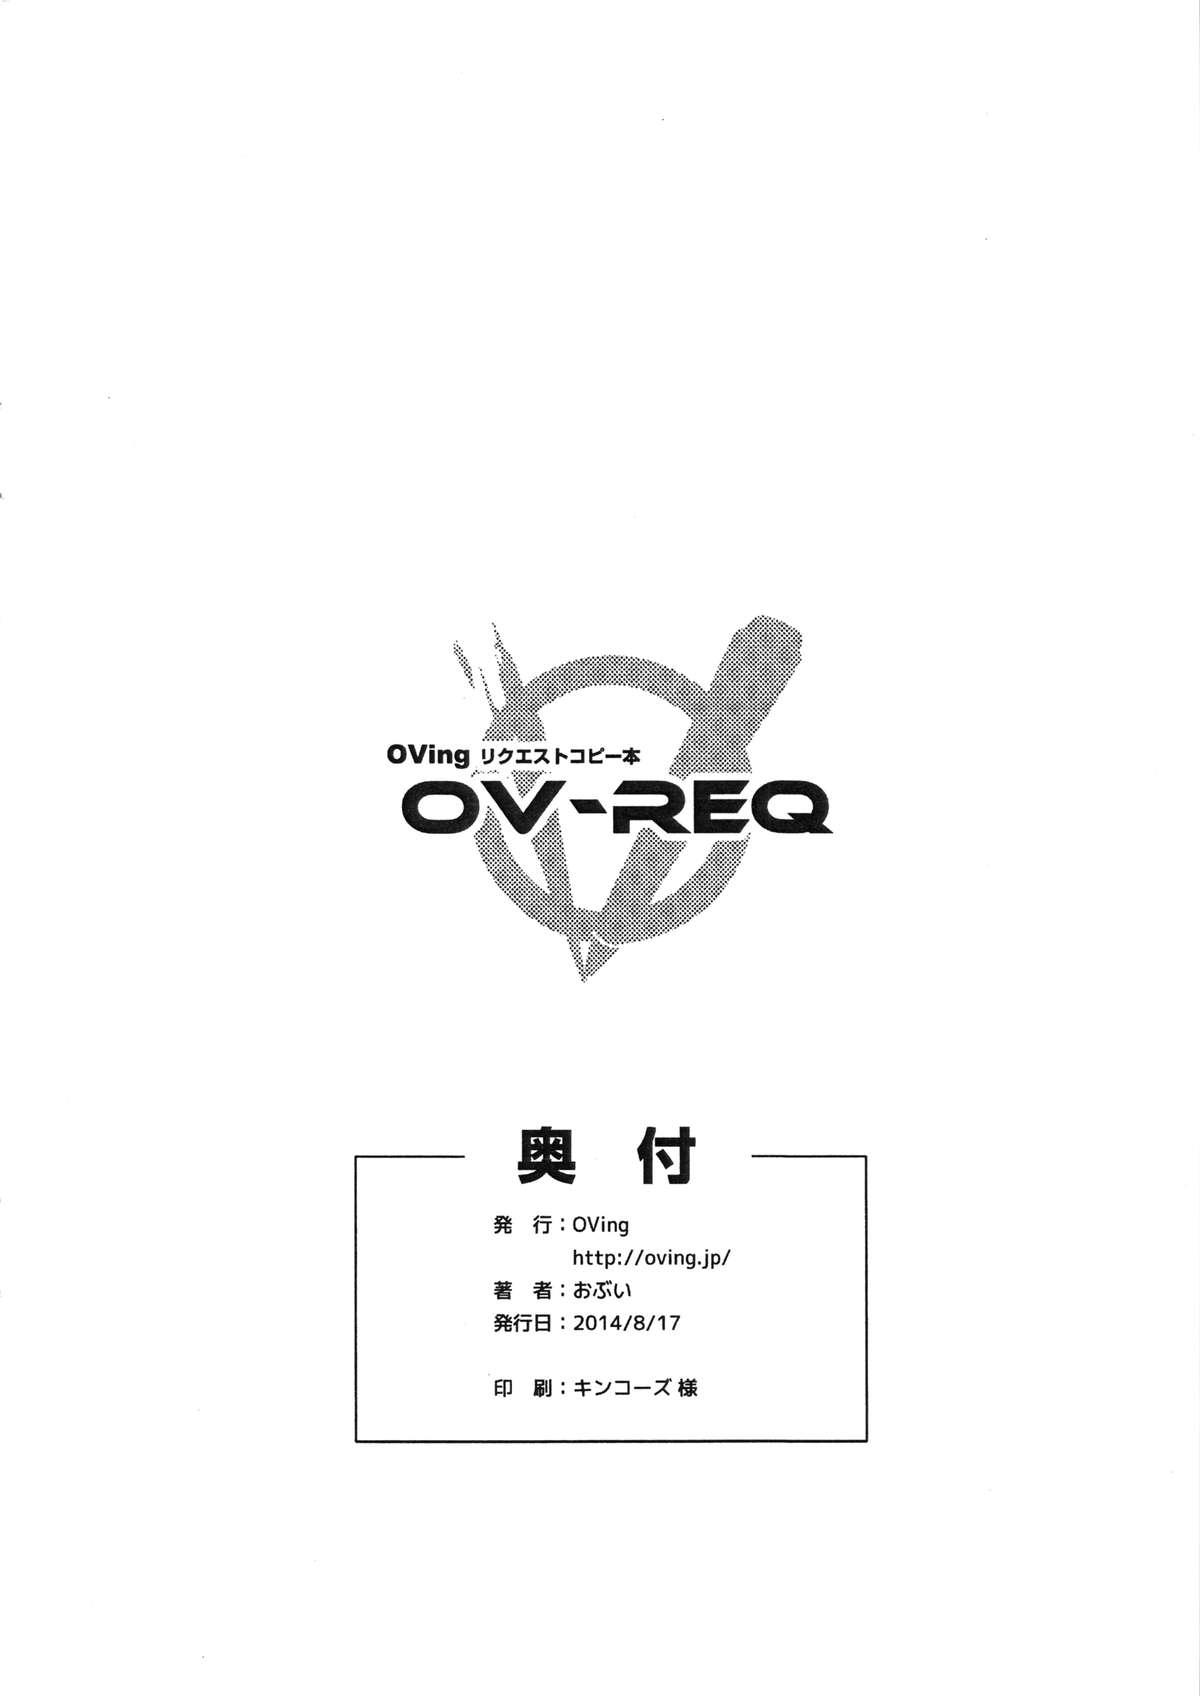 Hentai Marionette 2 + OV - REQ 34